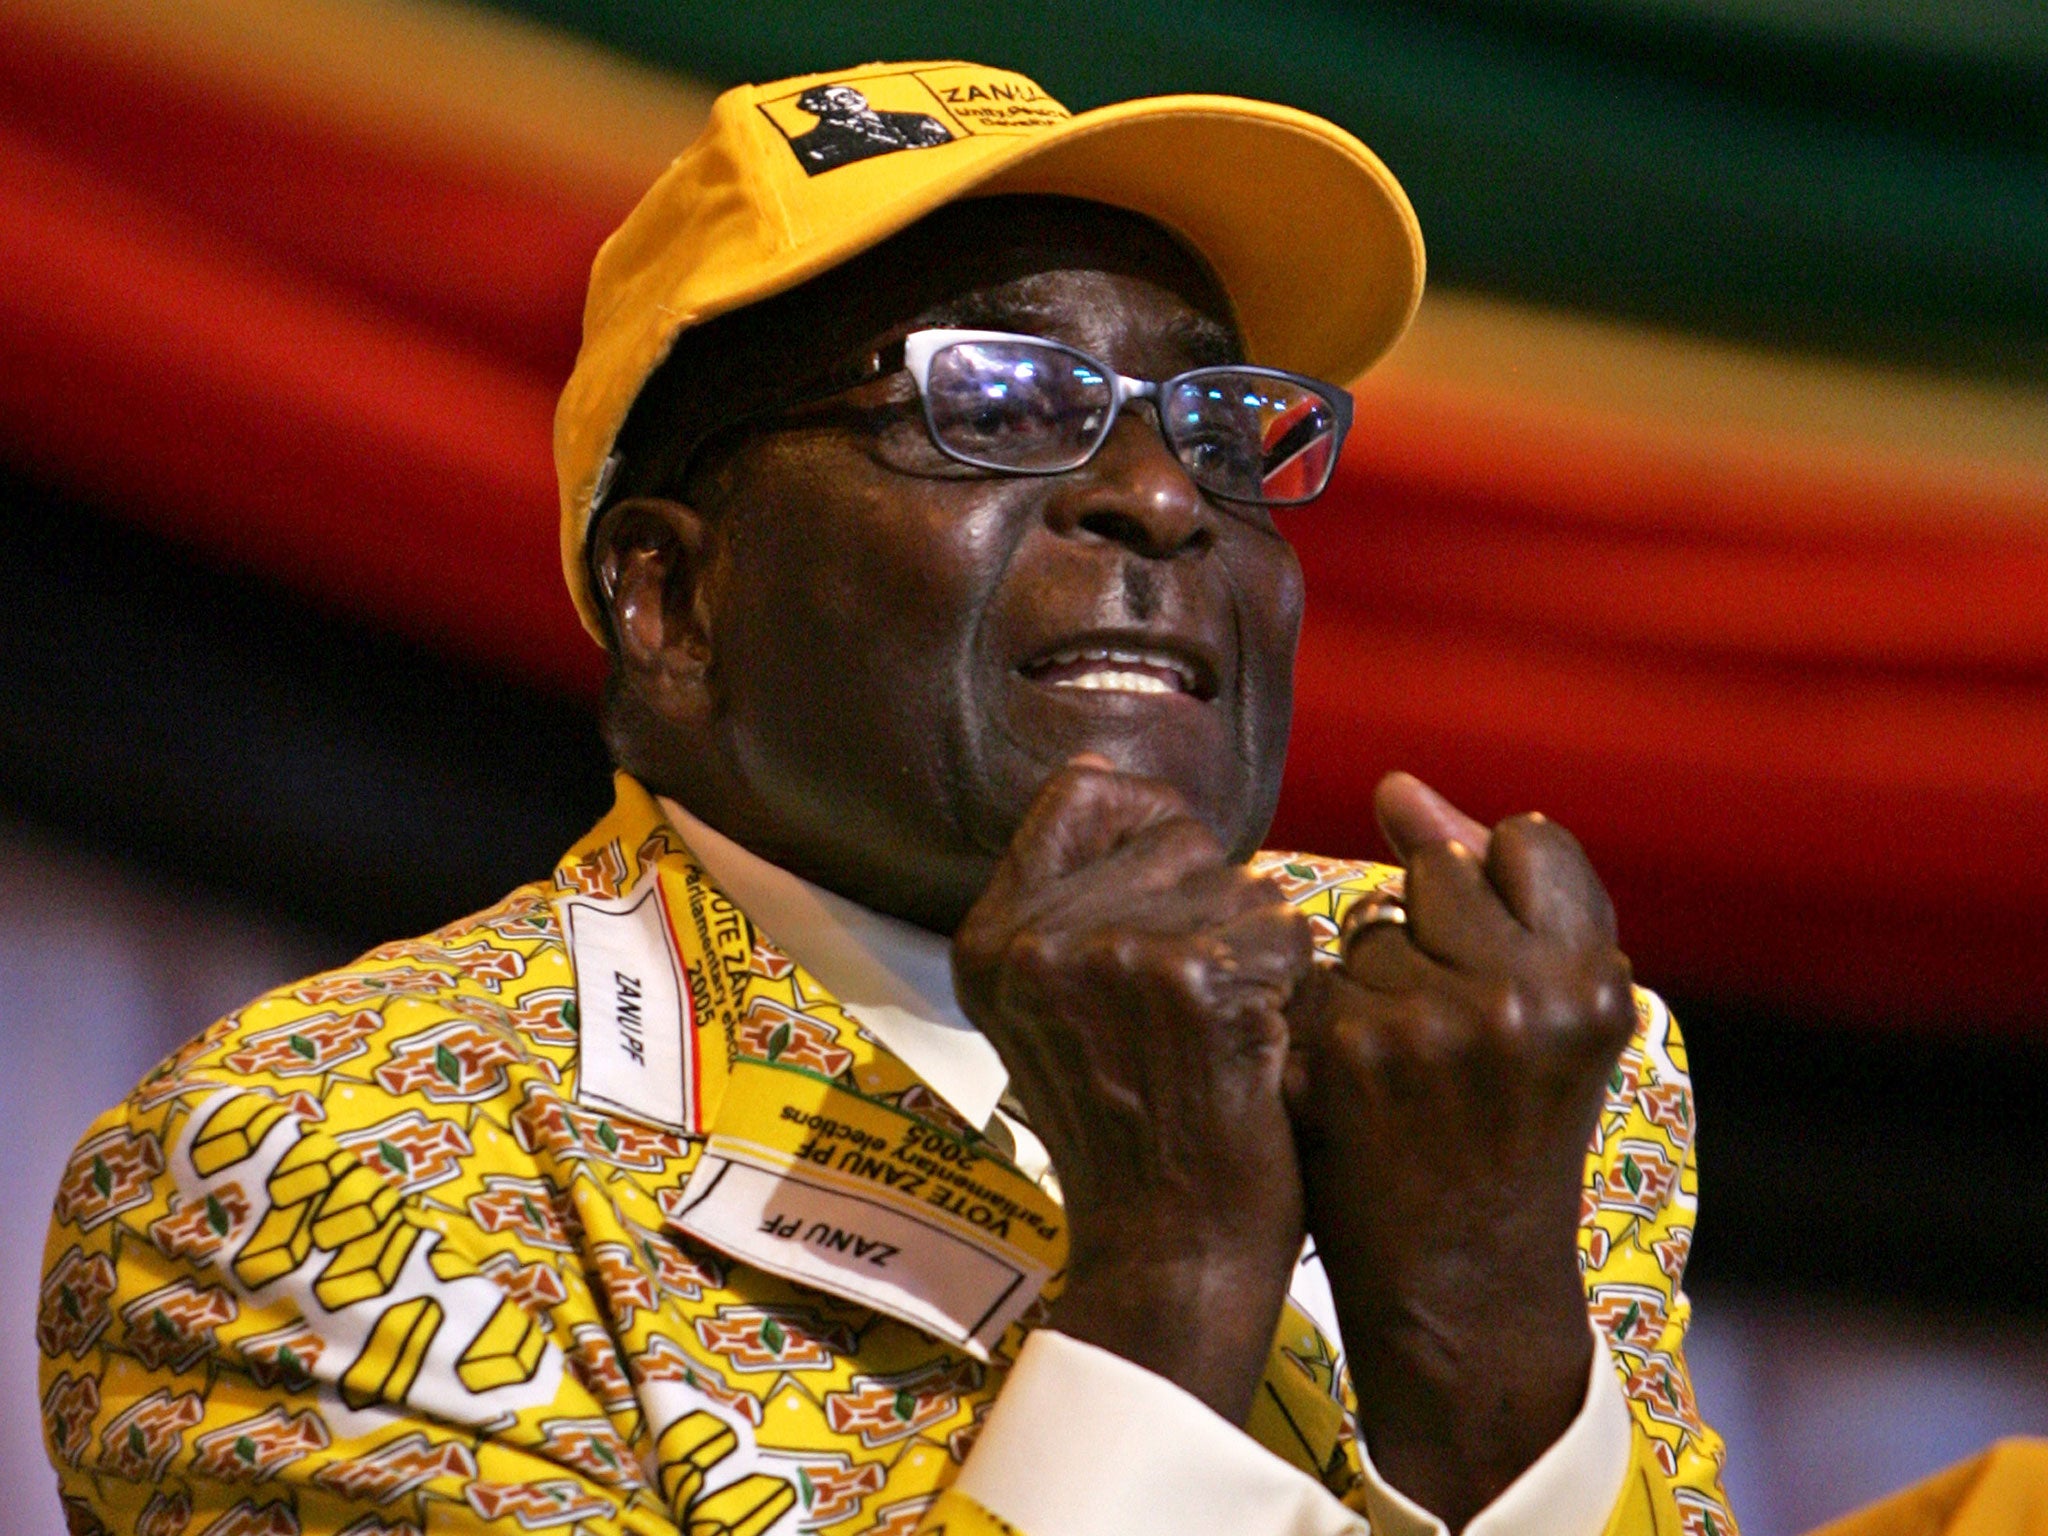 Robert Mugabe will be 94 at the next election